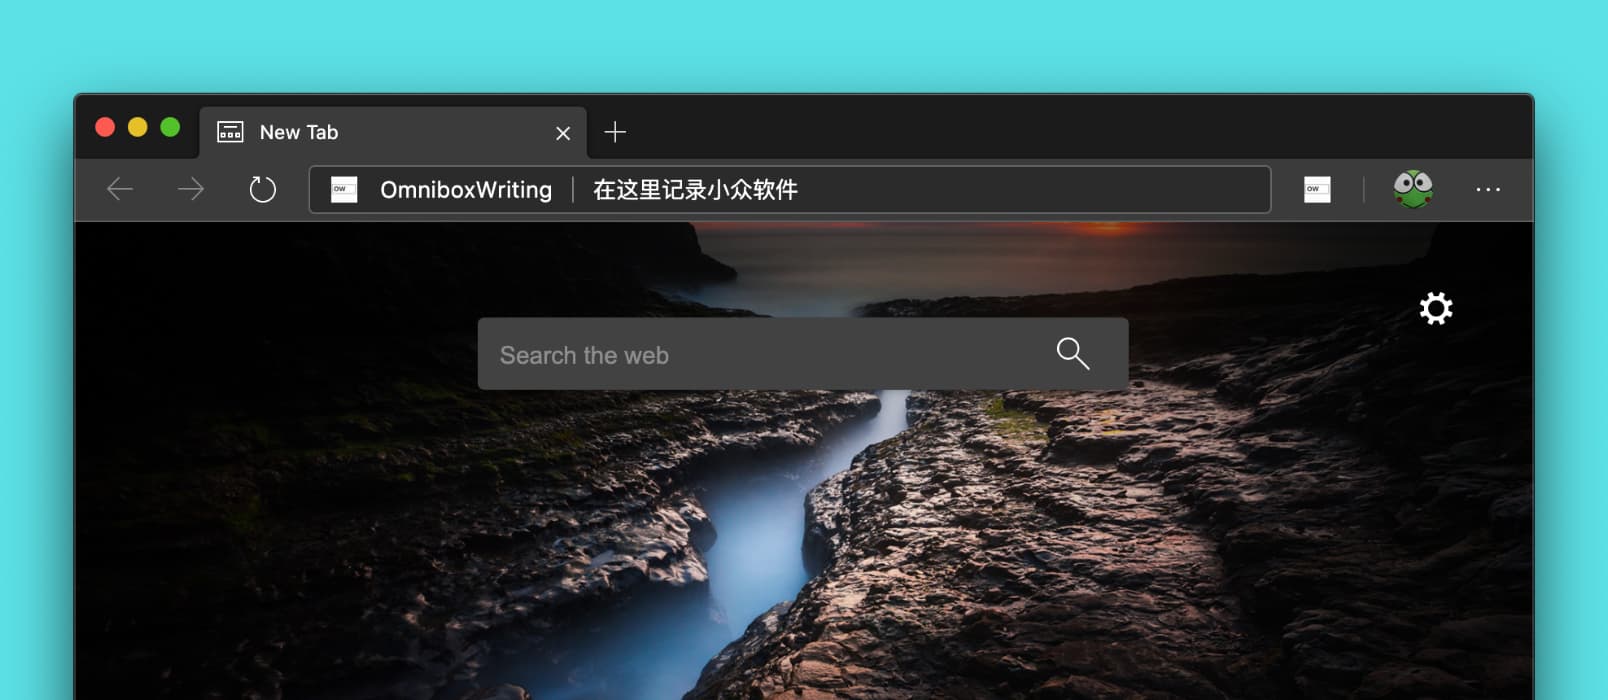 OmniboxWriting - 思路清奇，在 Chrome 地址栏记录临时笔记、便签 1